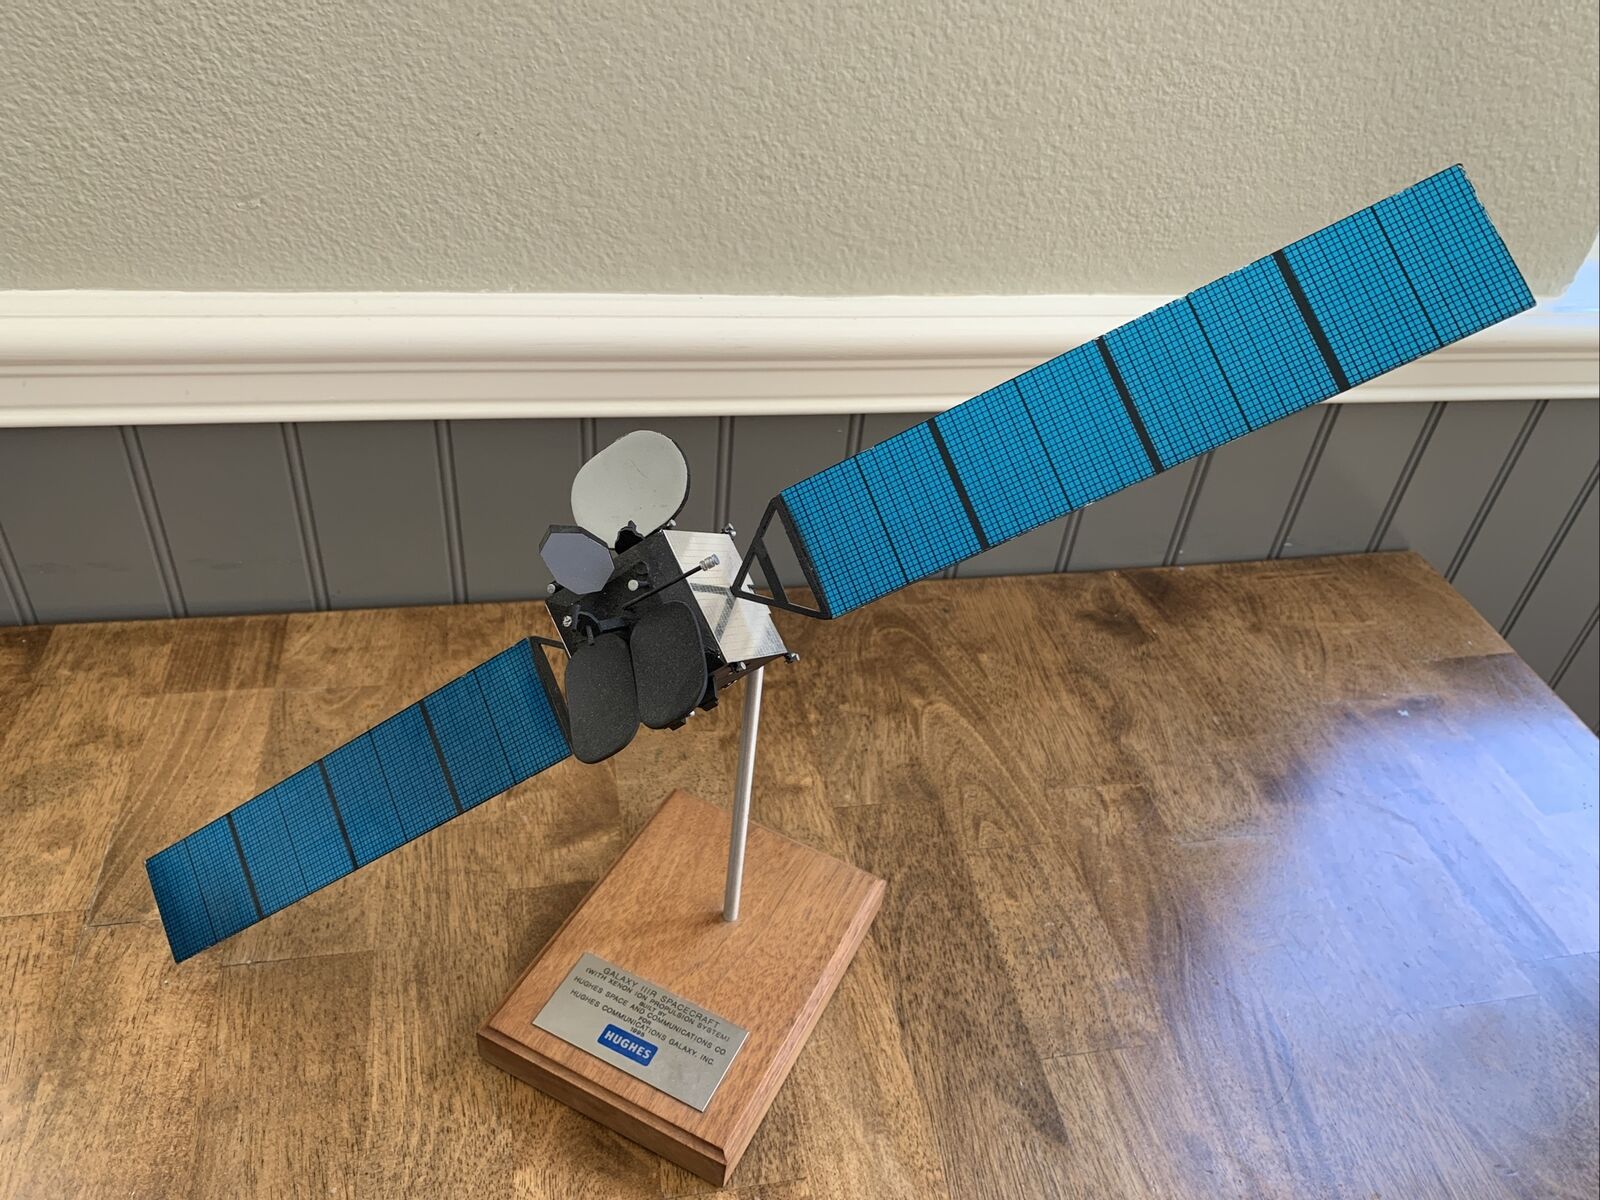 Galaxy Iir Spacecraft Model Custom Built By Hughes For Hughes Executive